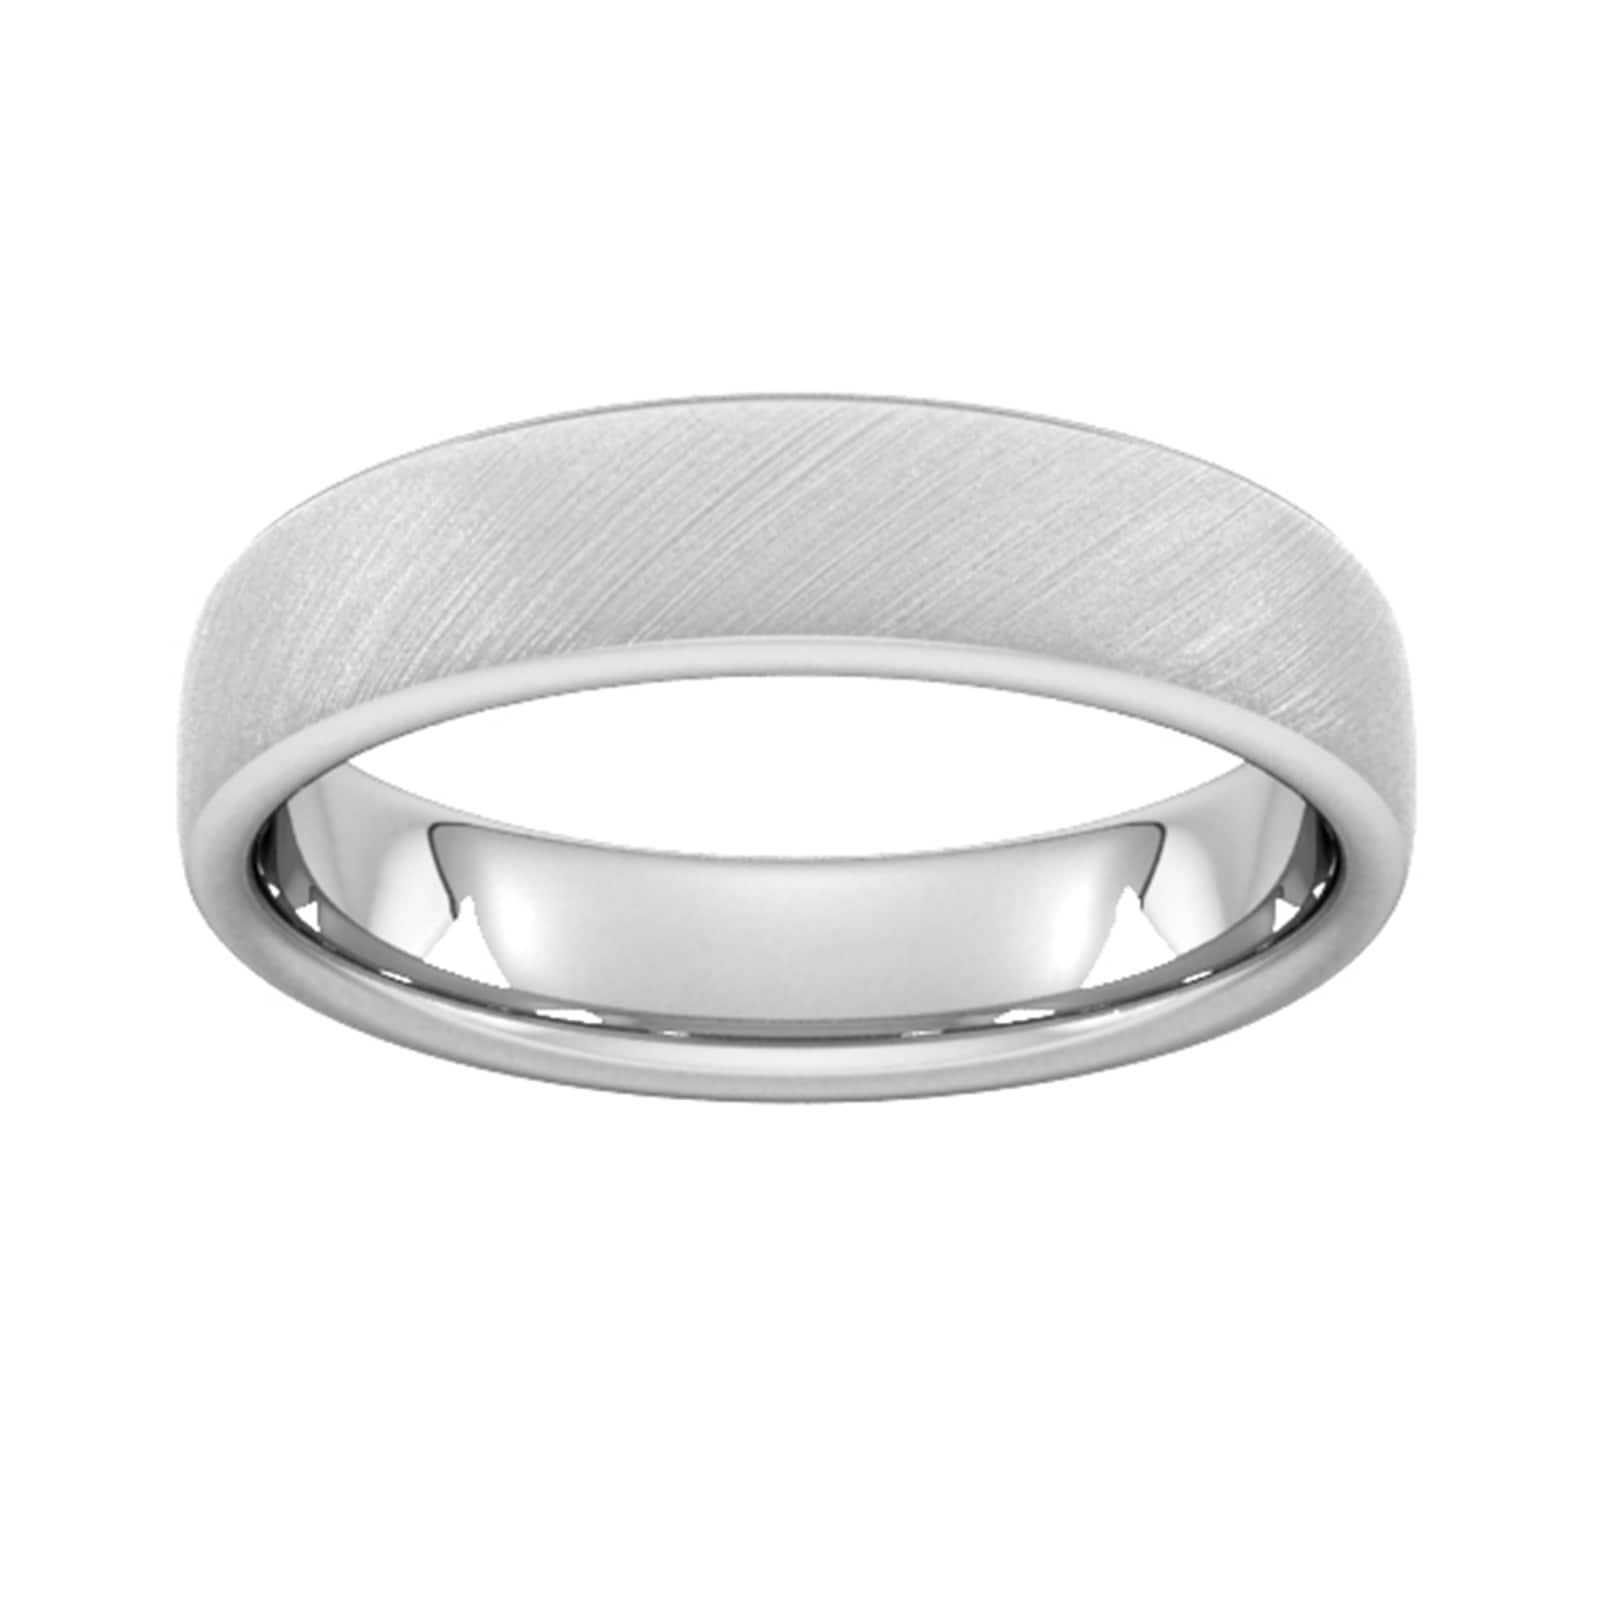 5mm Traditional Court Standard Diagonal Matt Finish Wedding Ring In 950 Palladium - Ring Size O